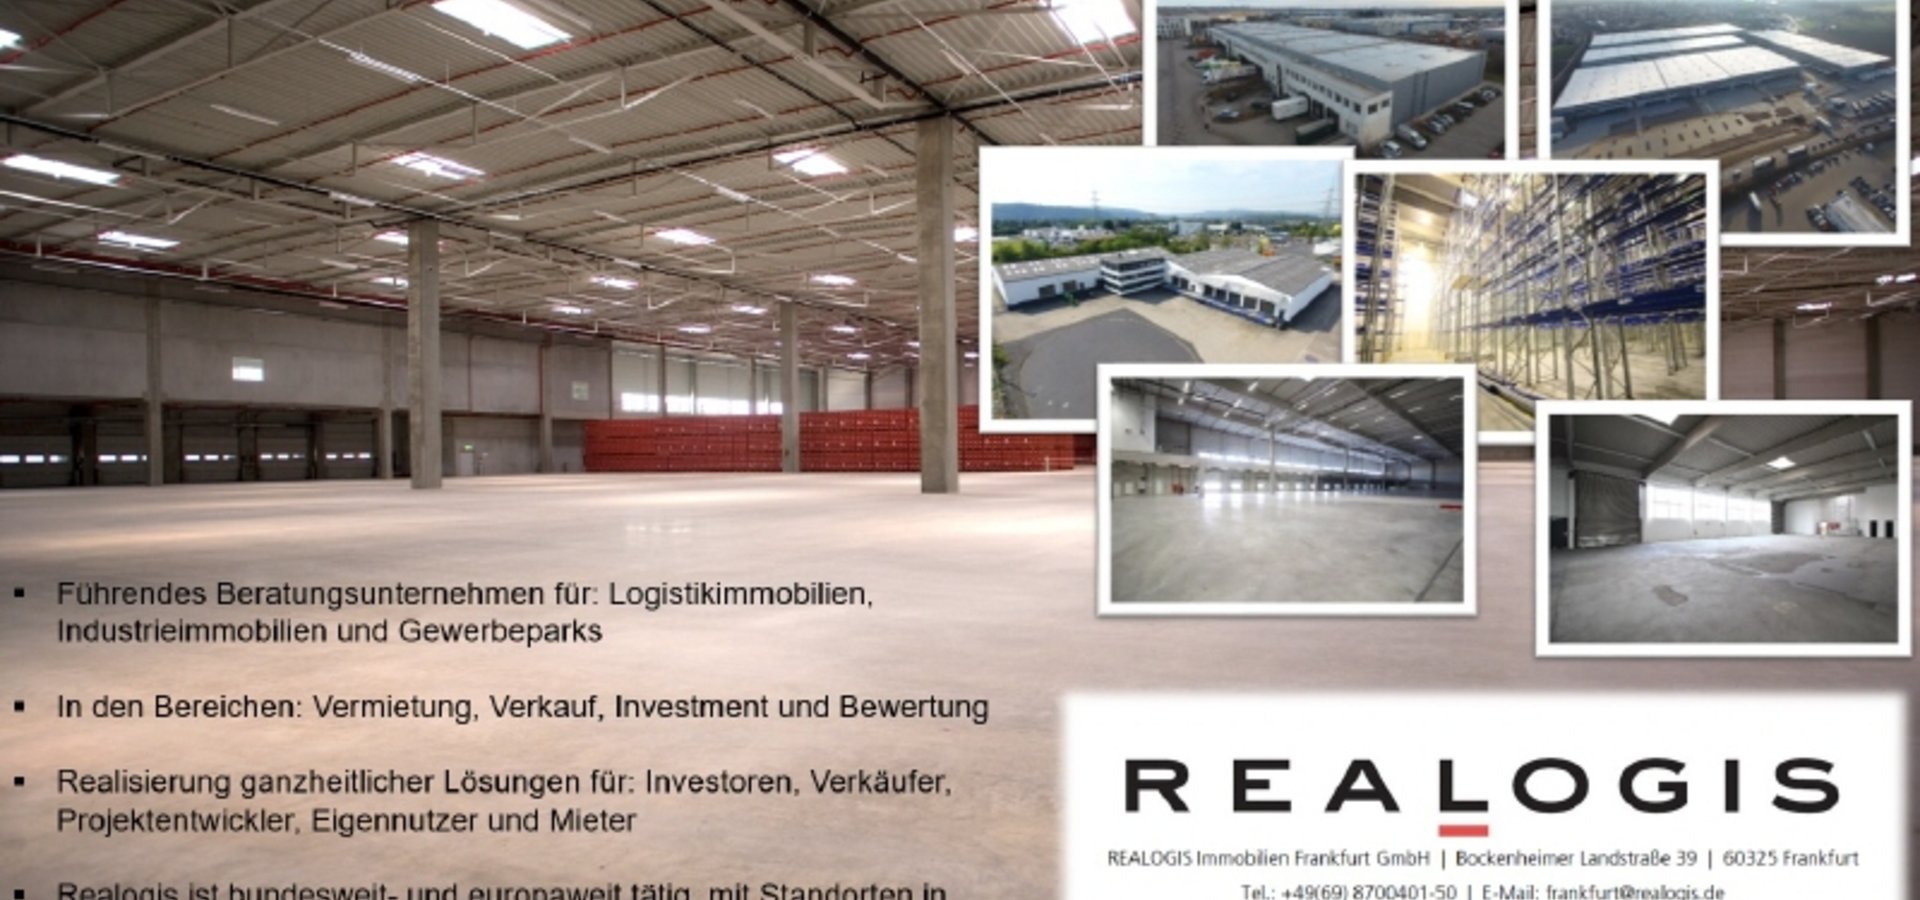 Realogis Immobilien Frankfurt GmbH